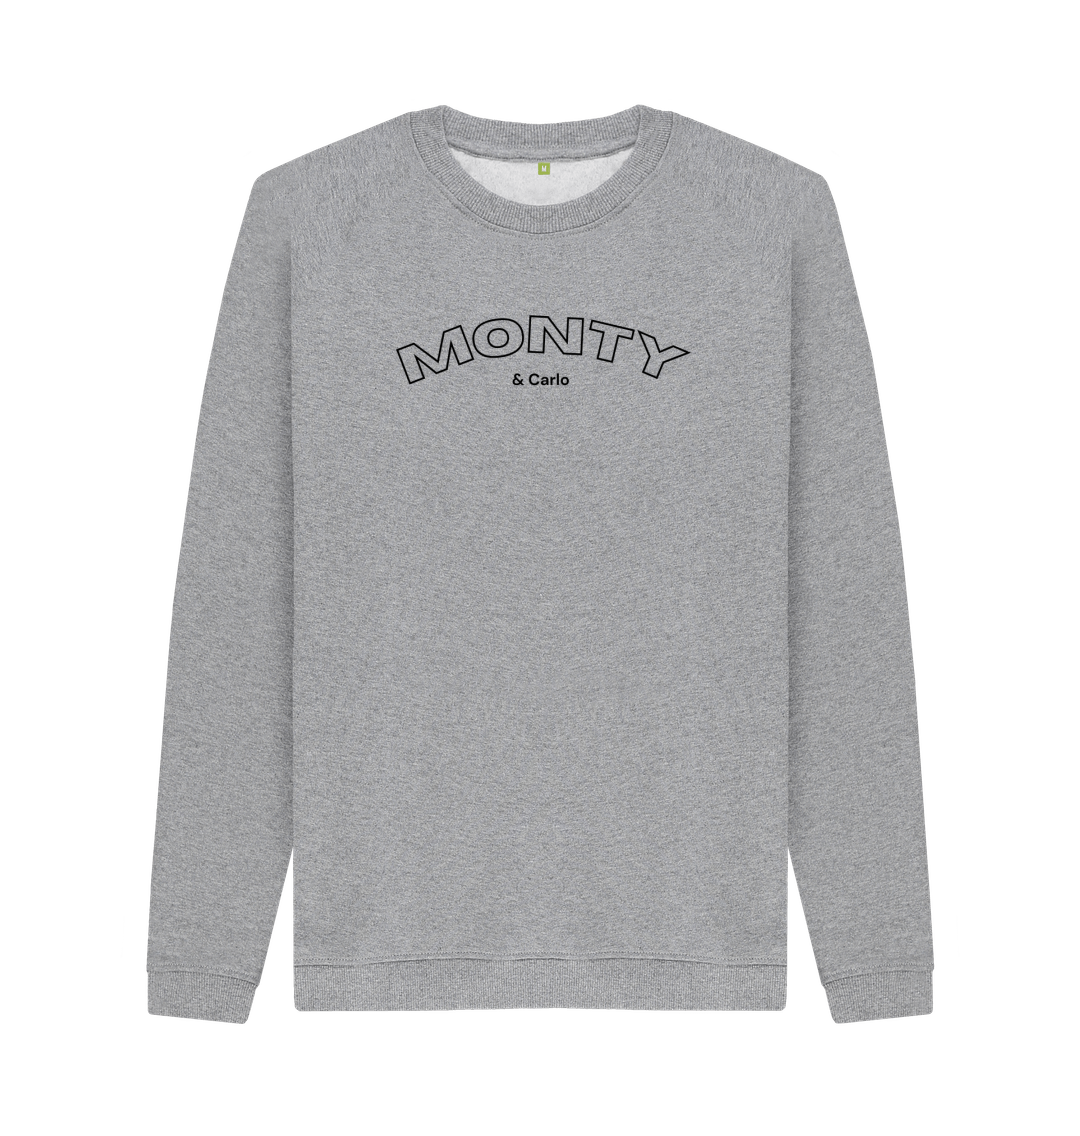 Buy Men's Organic Cotton Crew Neck Sweater